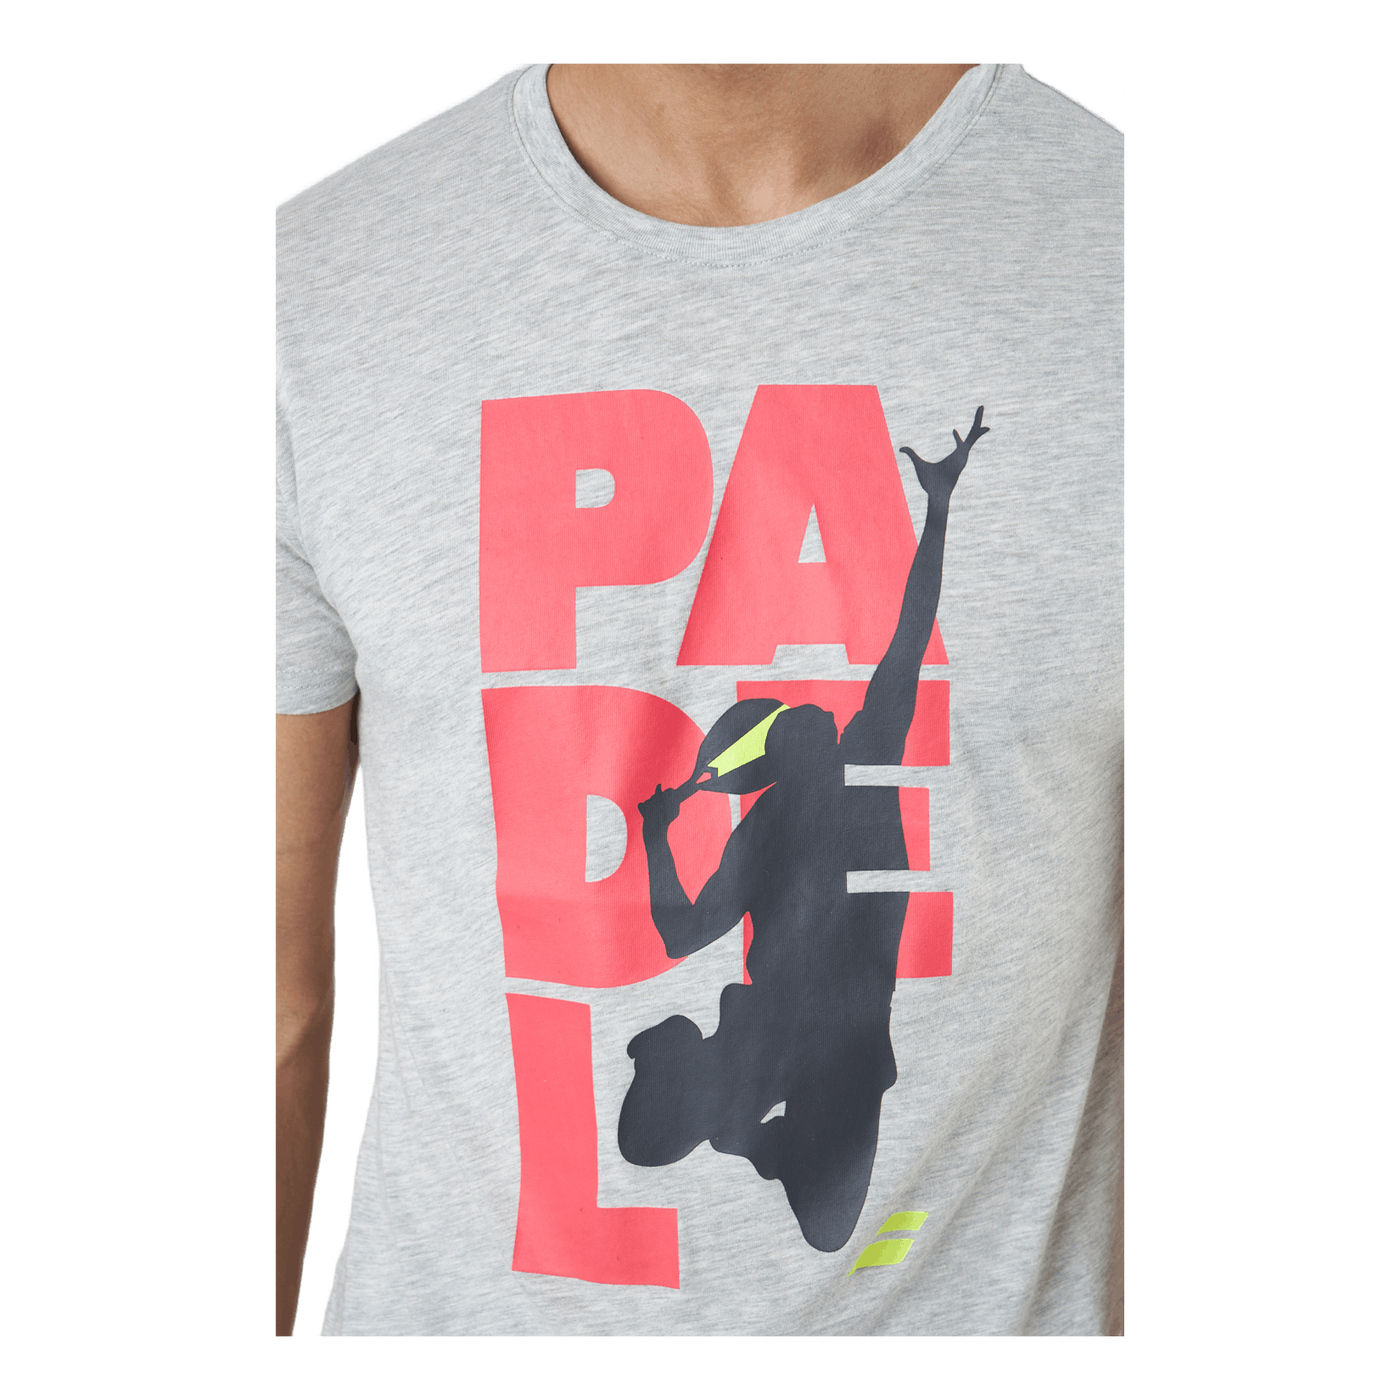 T-shirt Padel Cotton Grey